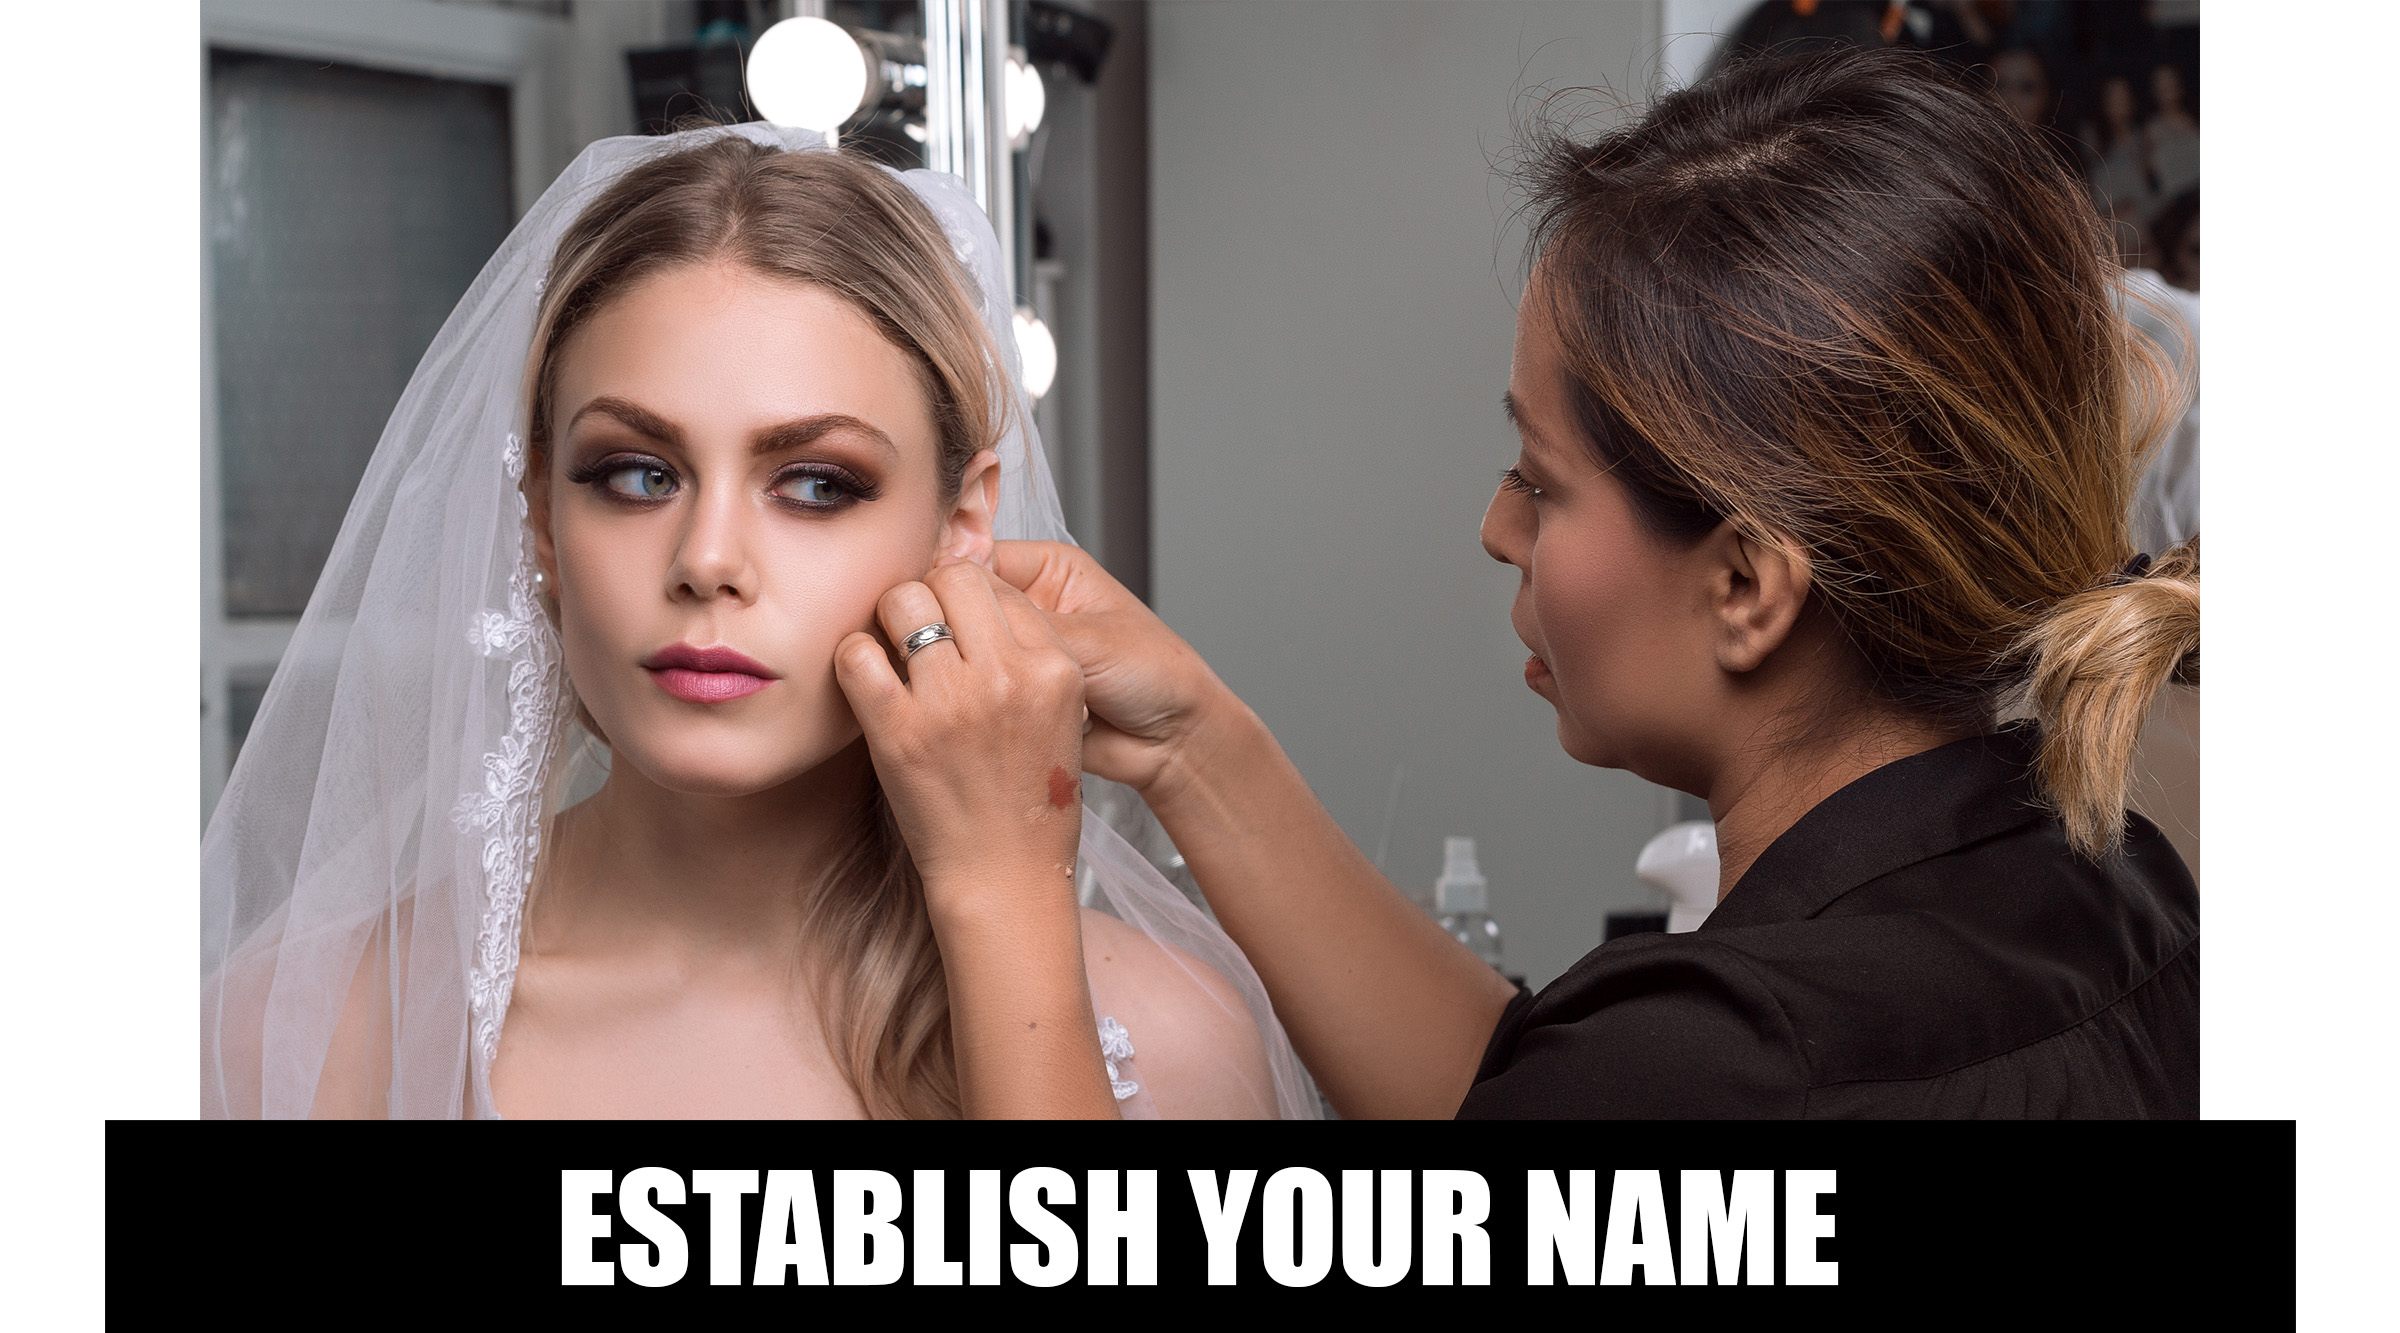 establish-your-name-in-beauty-business.jpg